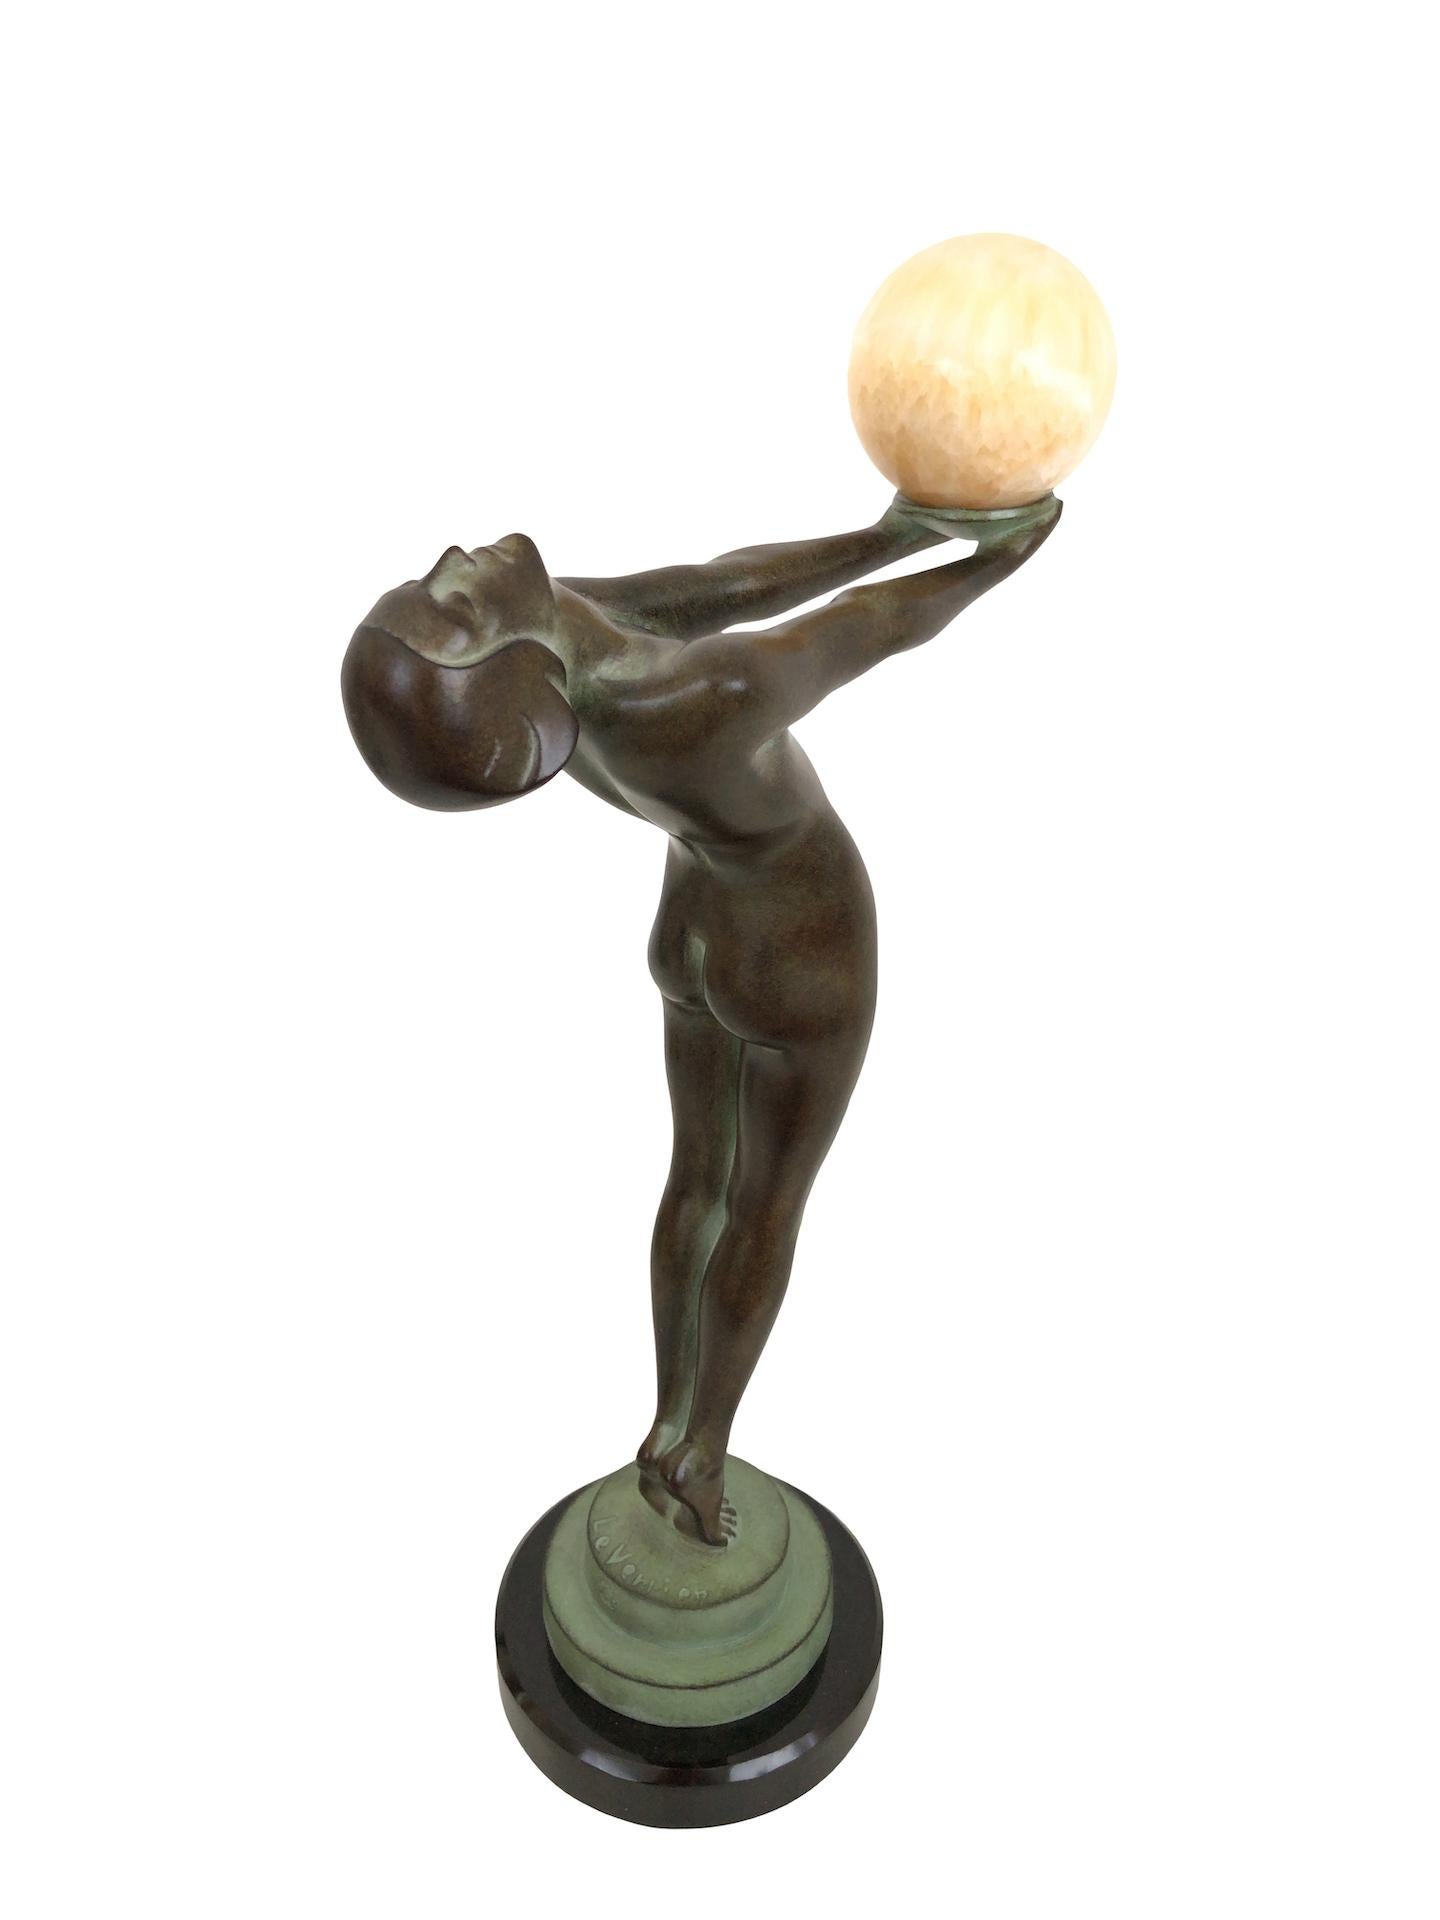 French Art Deco Style Dancer Sculpture Clarté with Onyx Ball Original Max Le Verrier